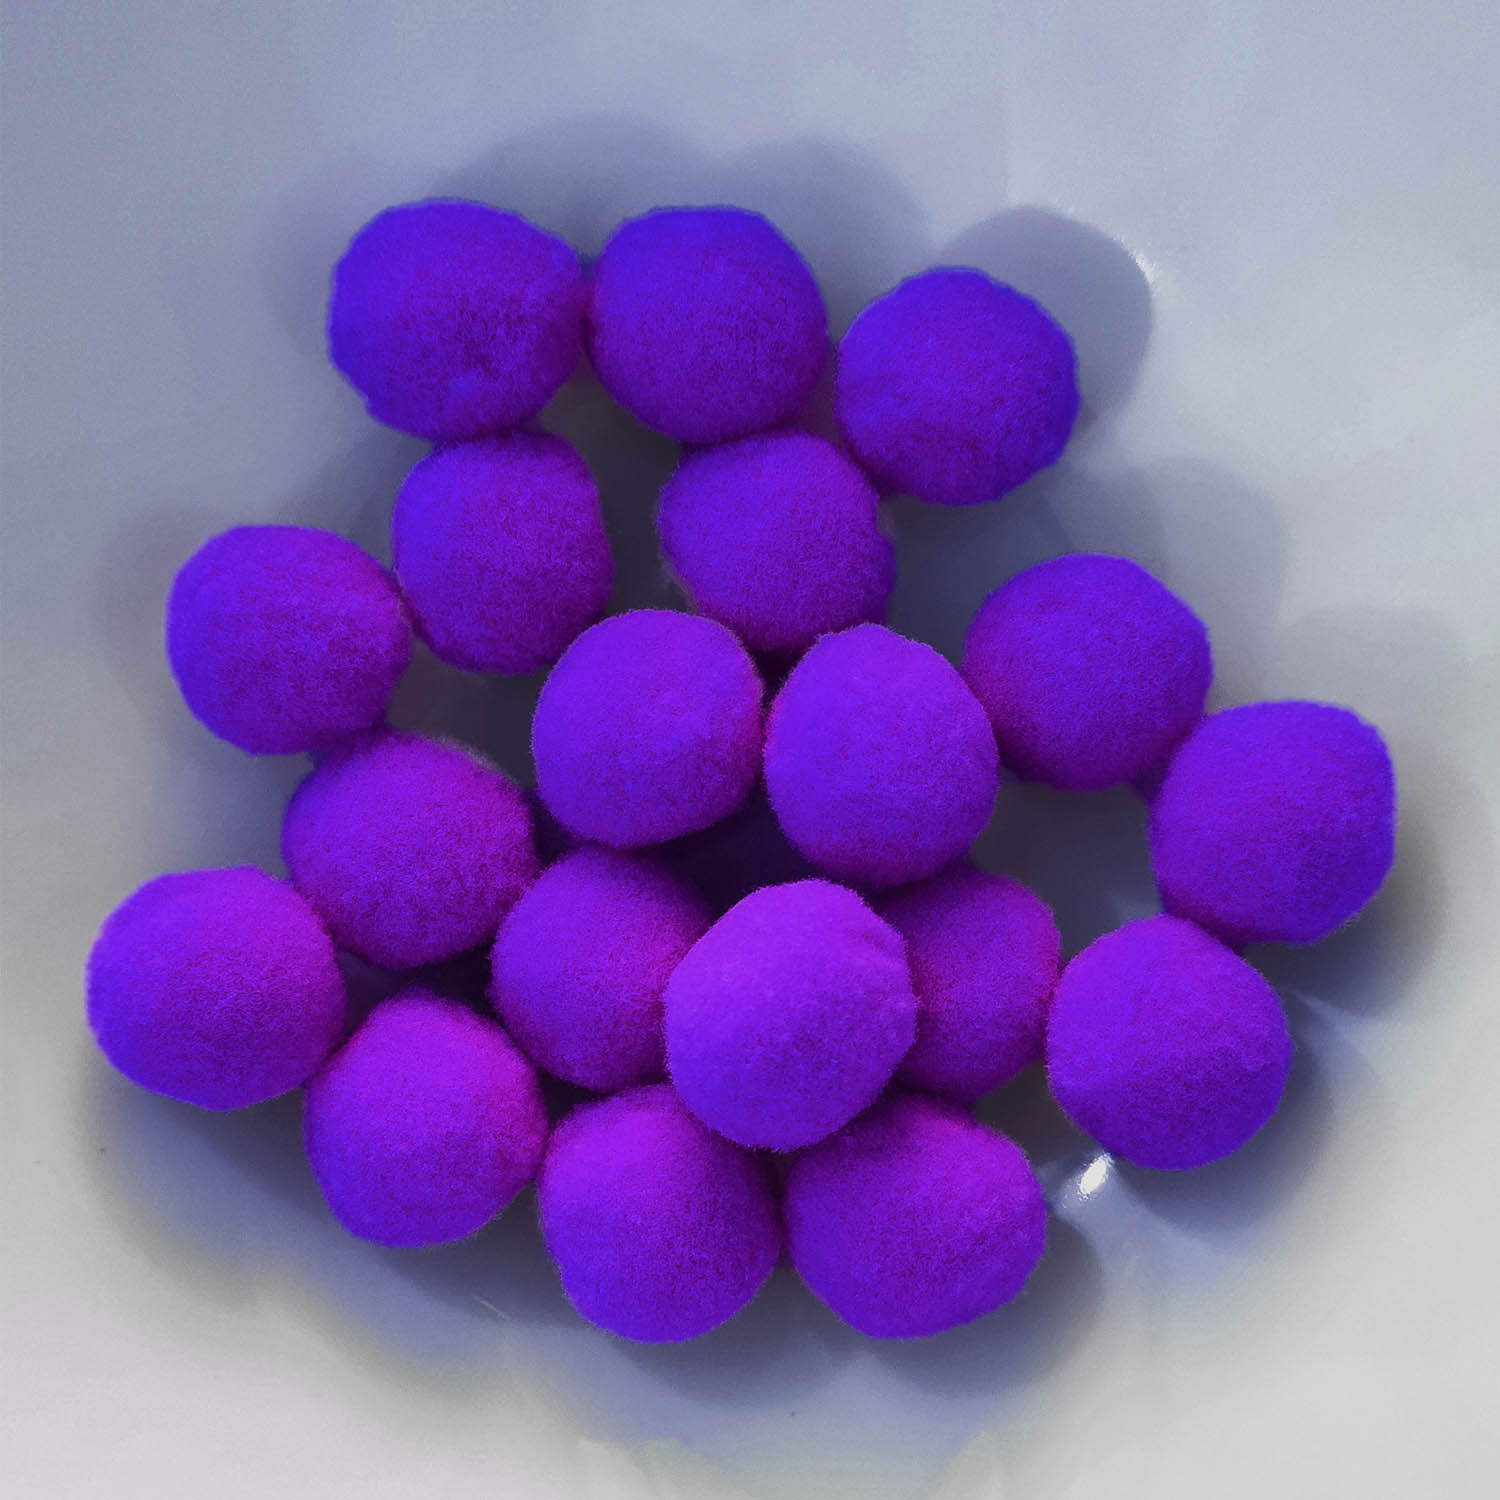 PomPon / Bälle aus Baumwolle - 25 mm / 20er Set - Flieder dunkel